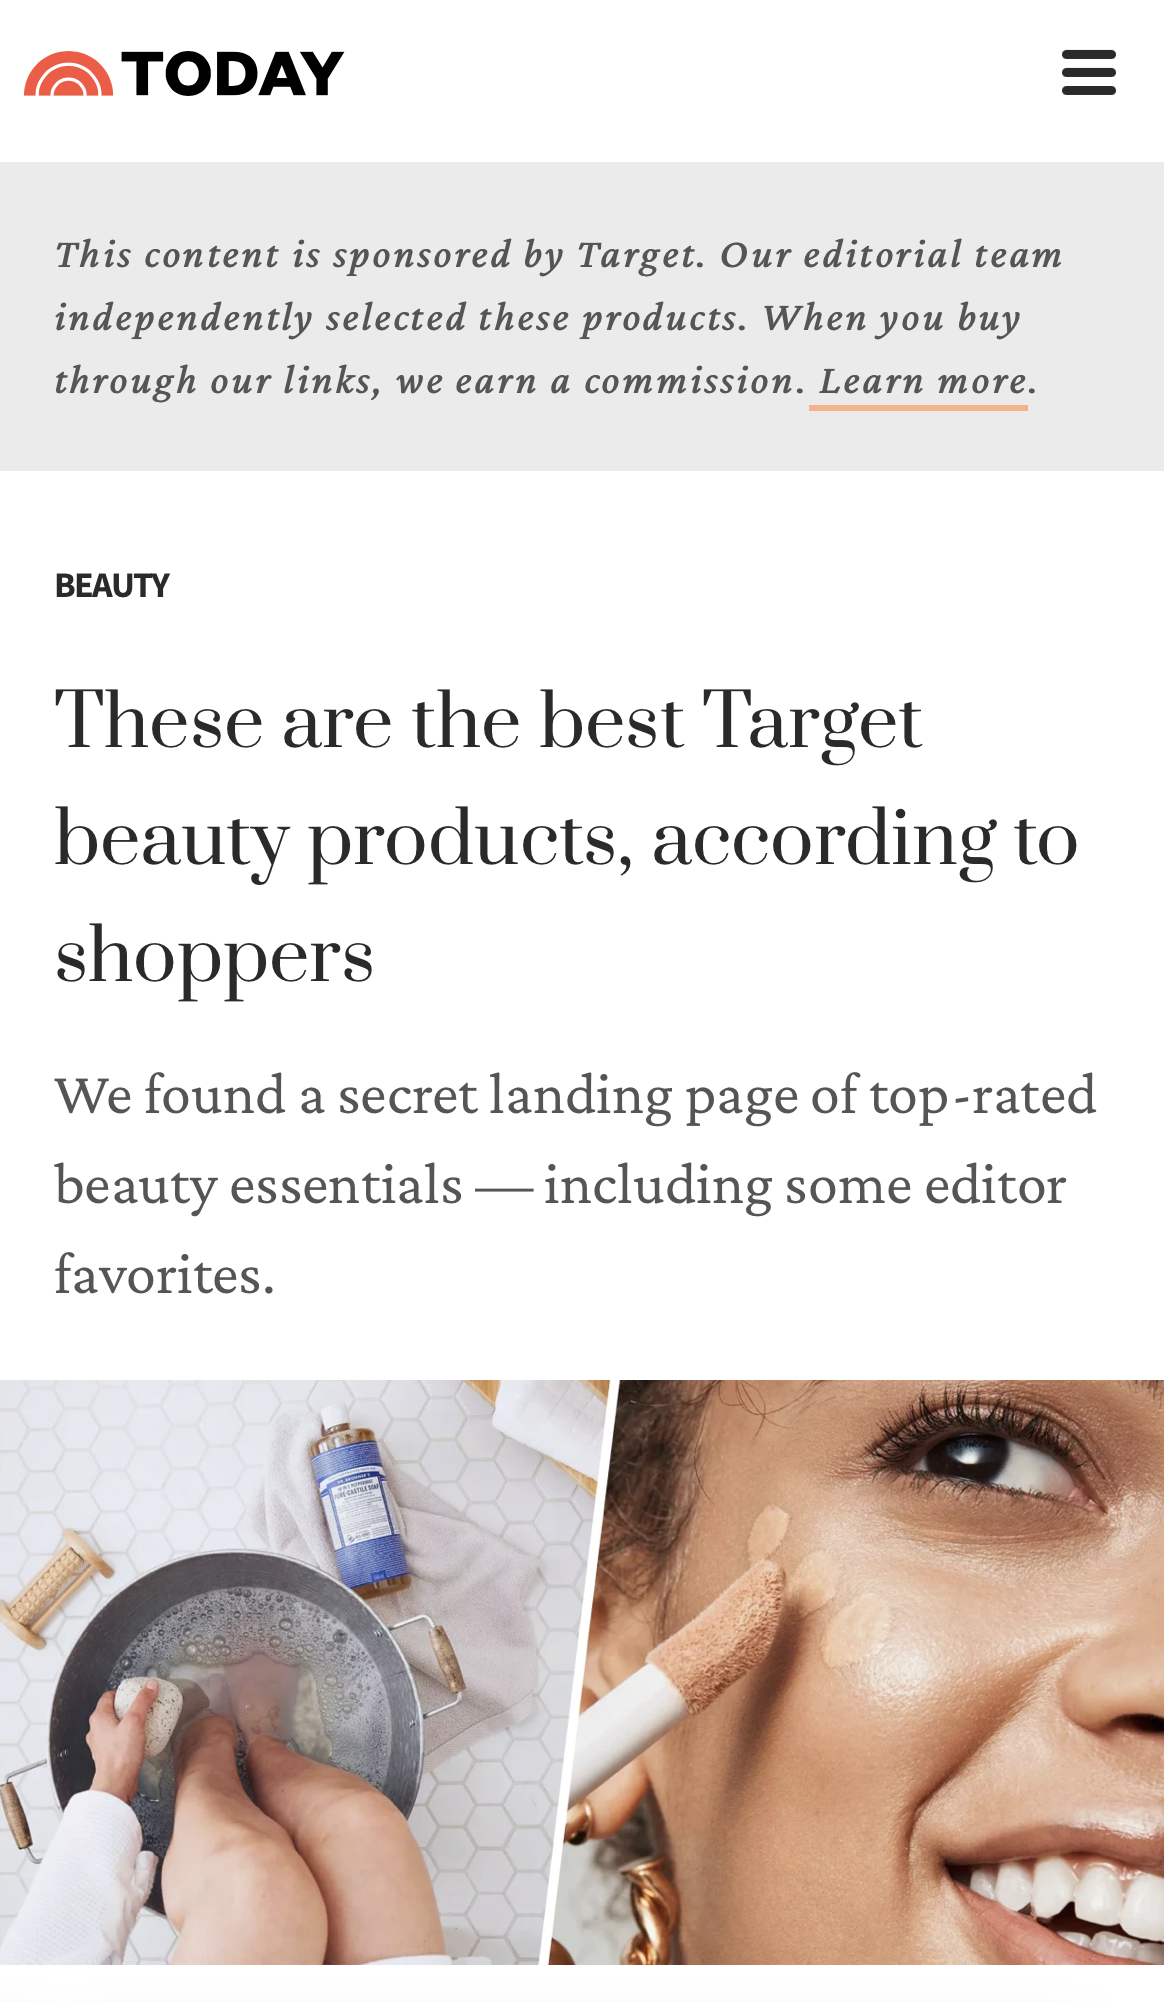 Target Partnership / Editor